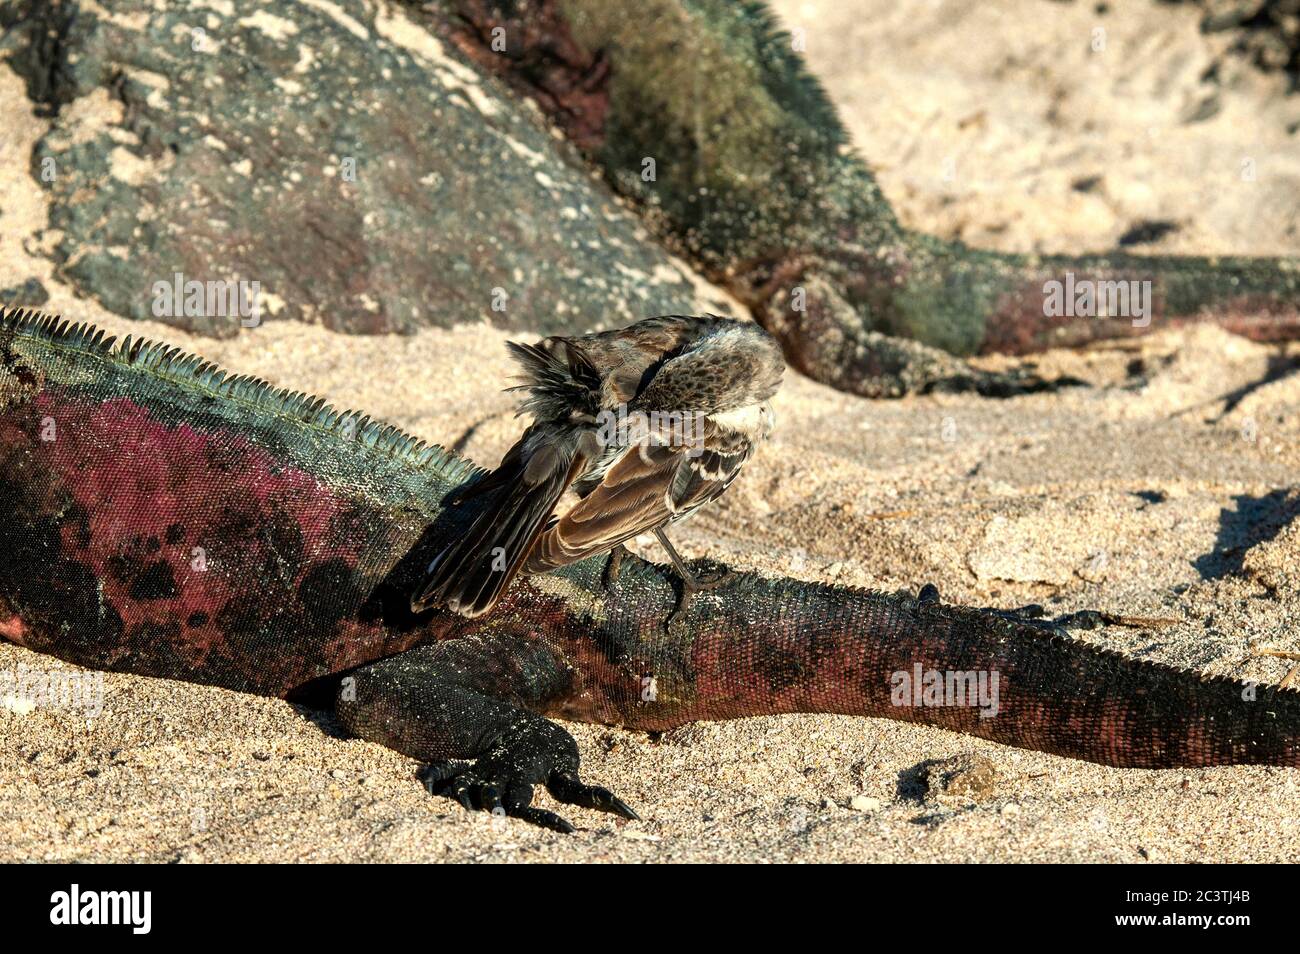 Hood mockingbird, Espanola mockingbird (Nesomimus parvulus subsp. Macdonaldi, Nesomimus macdonaldi), perché sur une Iguana marine, Équateur, îles Galapagos Banque D'Images